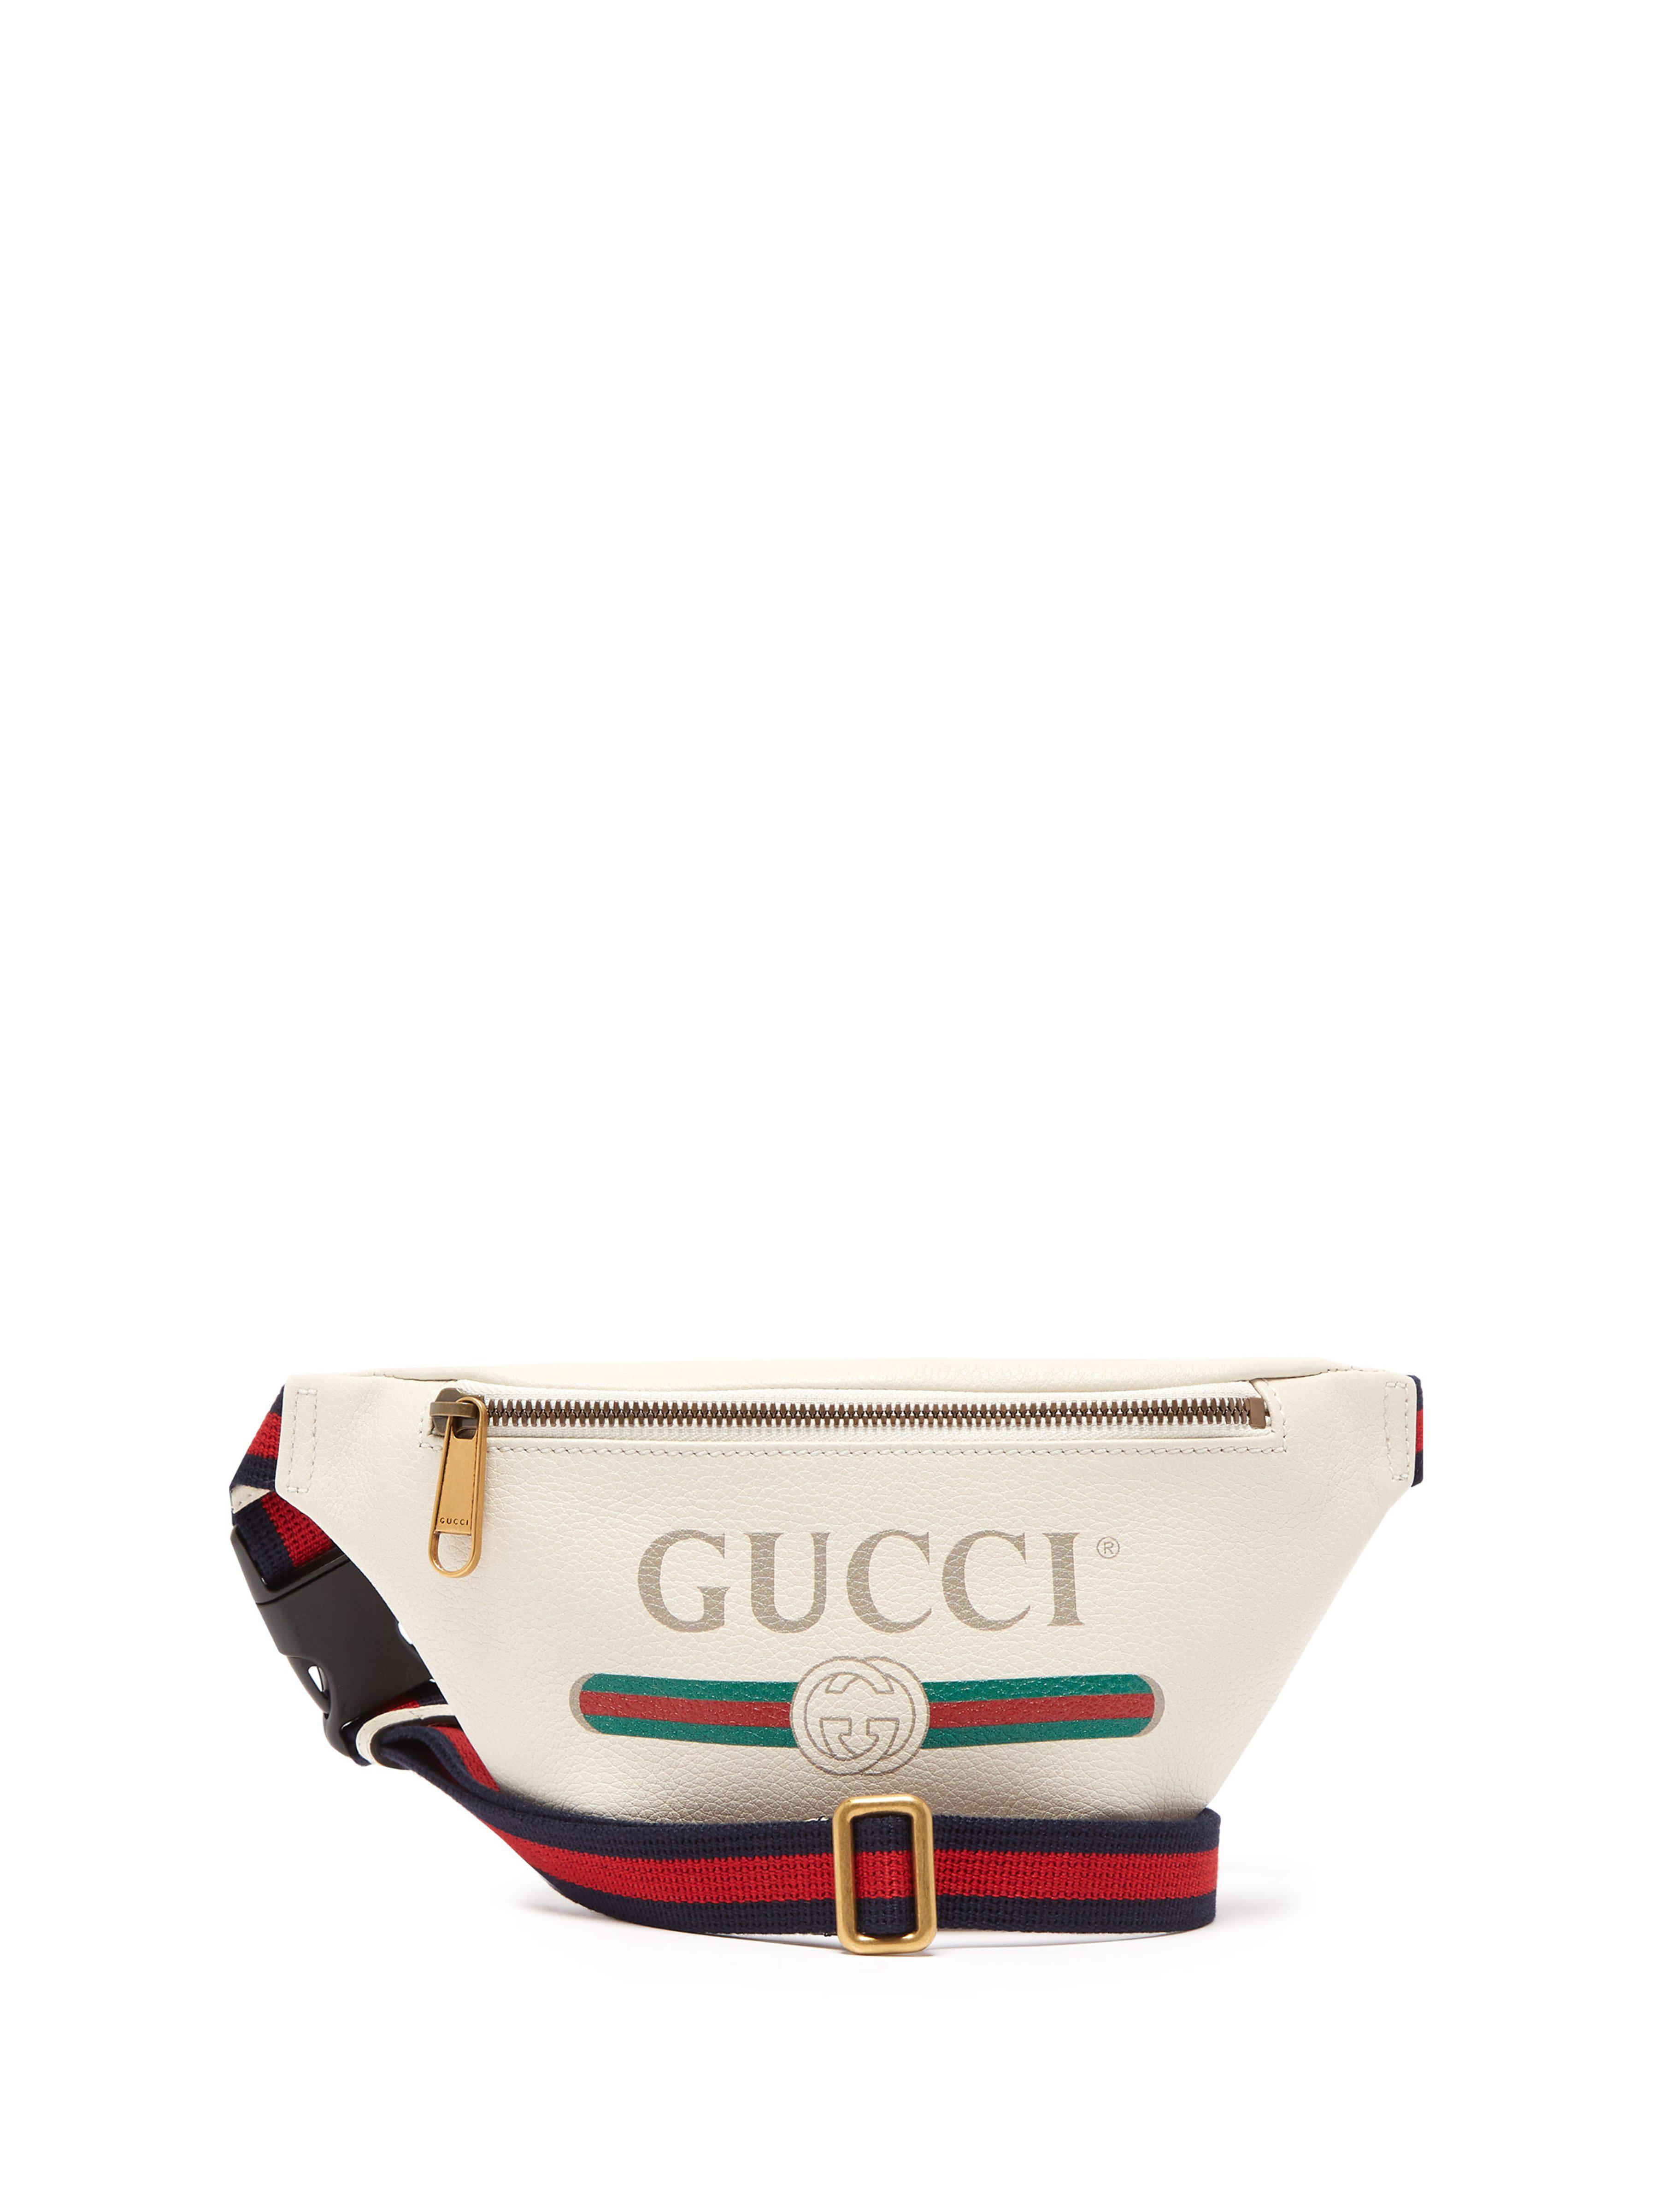 Gucci Print Belt Bag Vintage Logo Small | SEMA Data Co-op